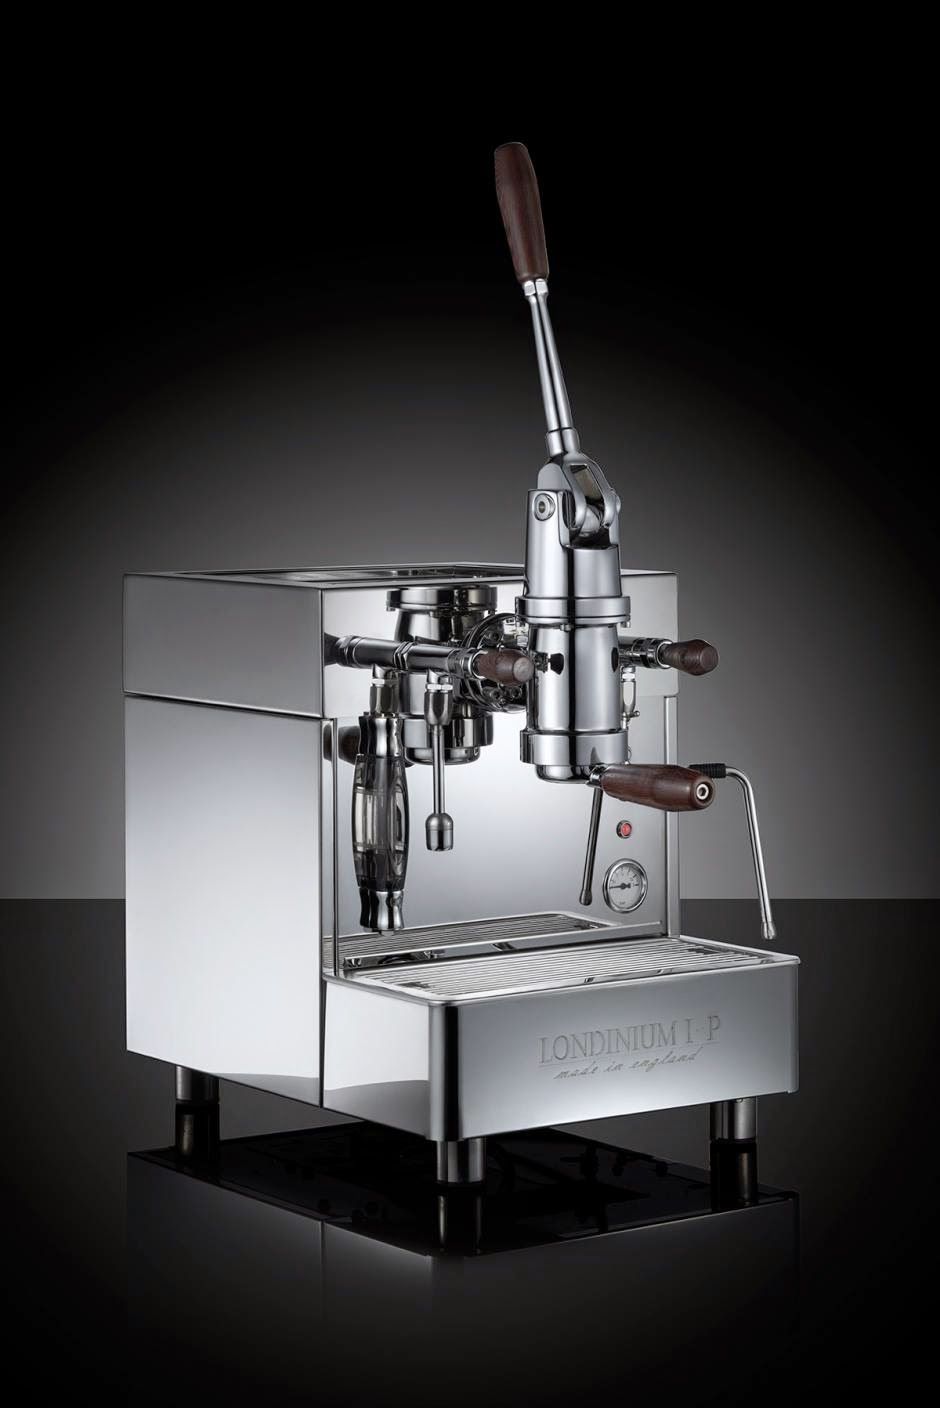 The new L1-P lever espresso machine by LONDINIUM | エスプレッソマシン, コーヒー, エスプレッソ